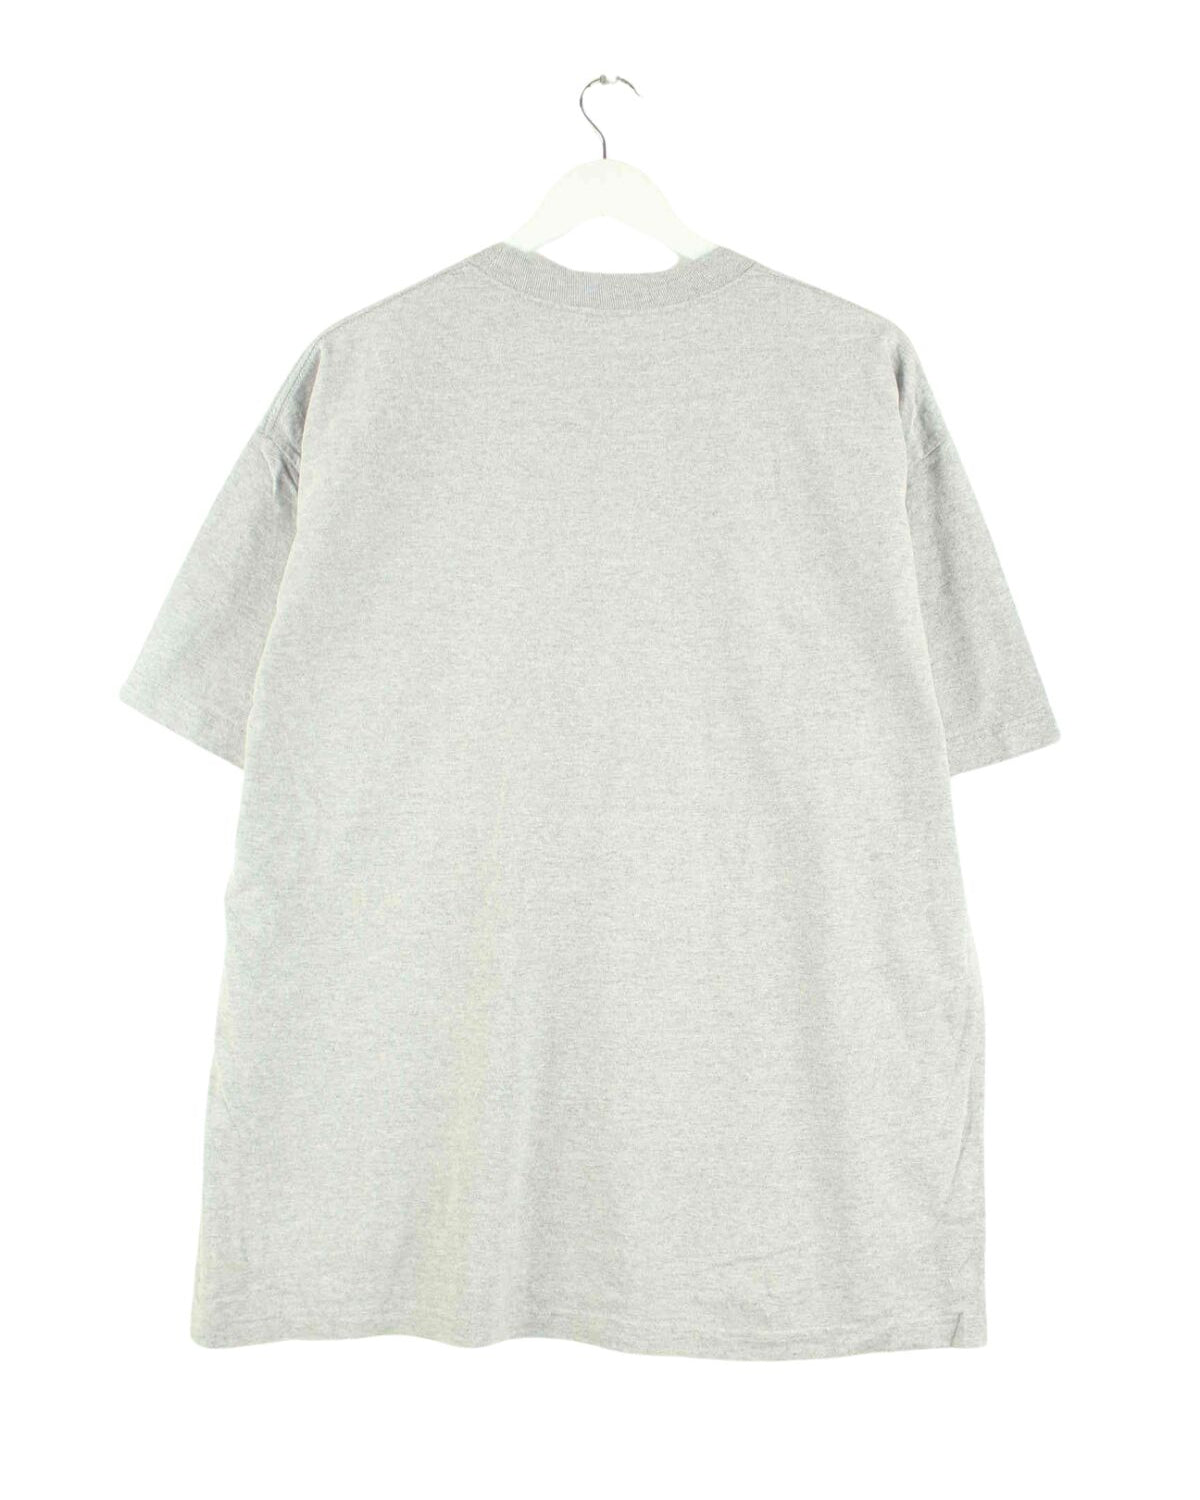 Nike Spellout Print T-Shirt Grau XL (back image)